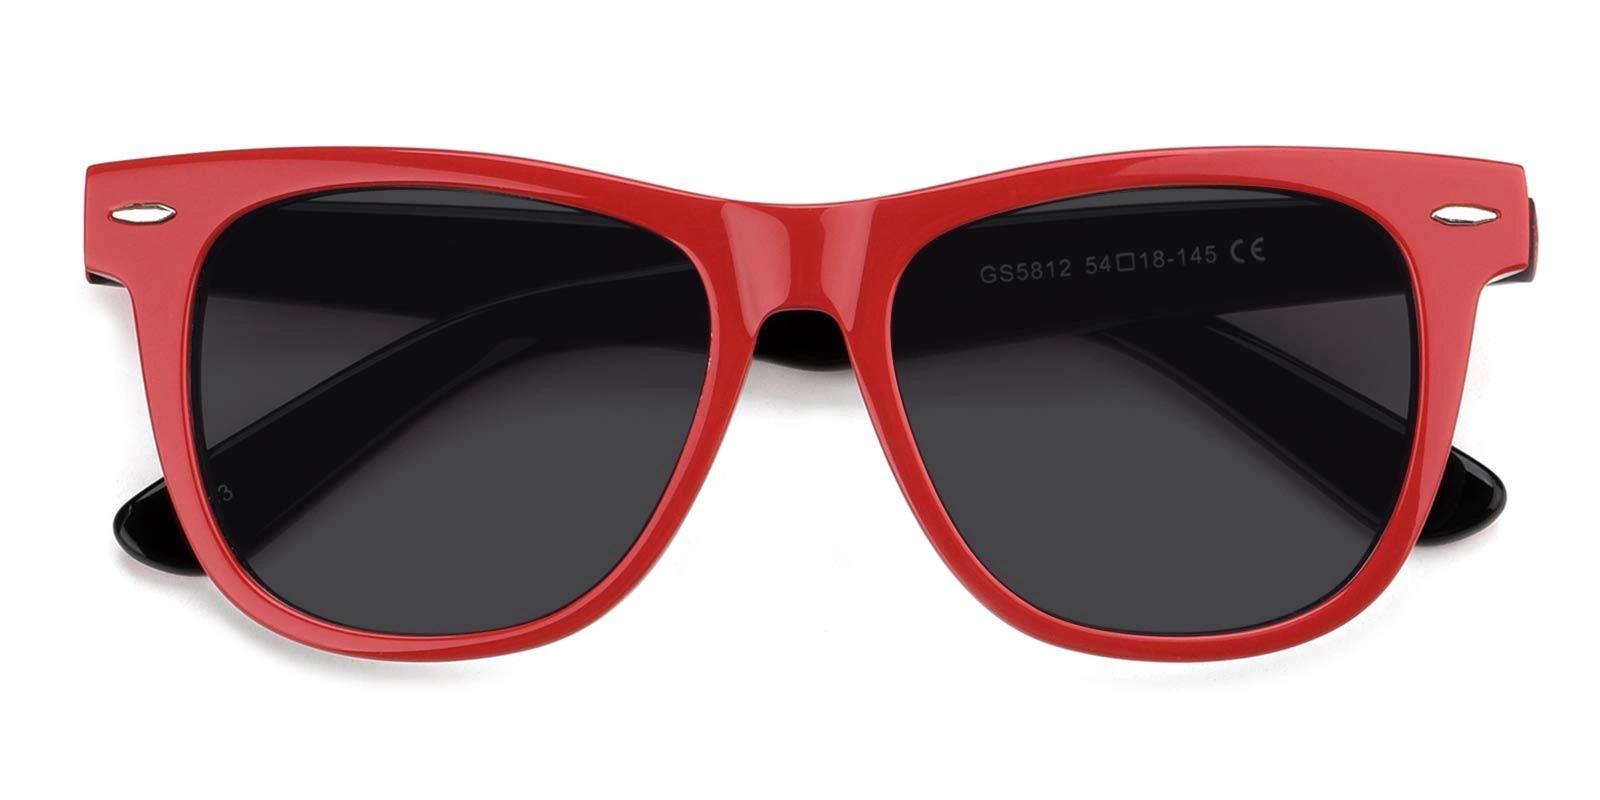 Worldator Red Acetate Sunglasses , UniversalBridgeFit Frames from ABBE Glasses